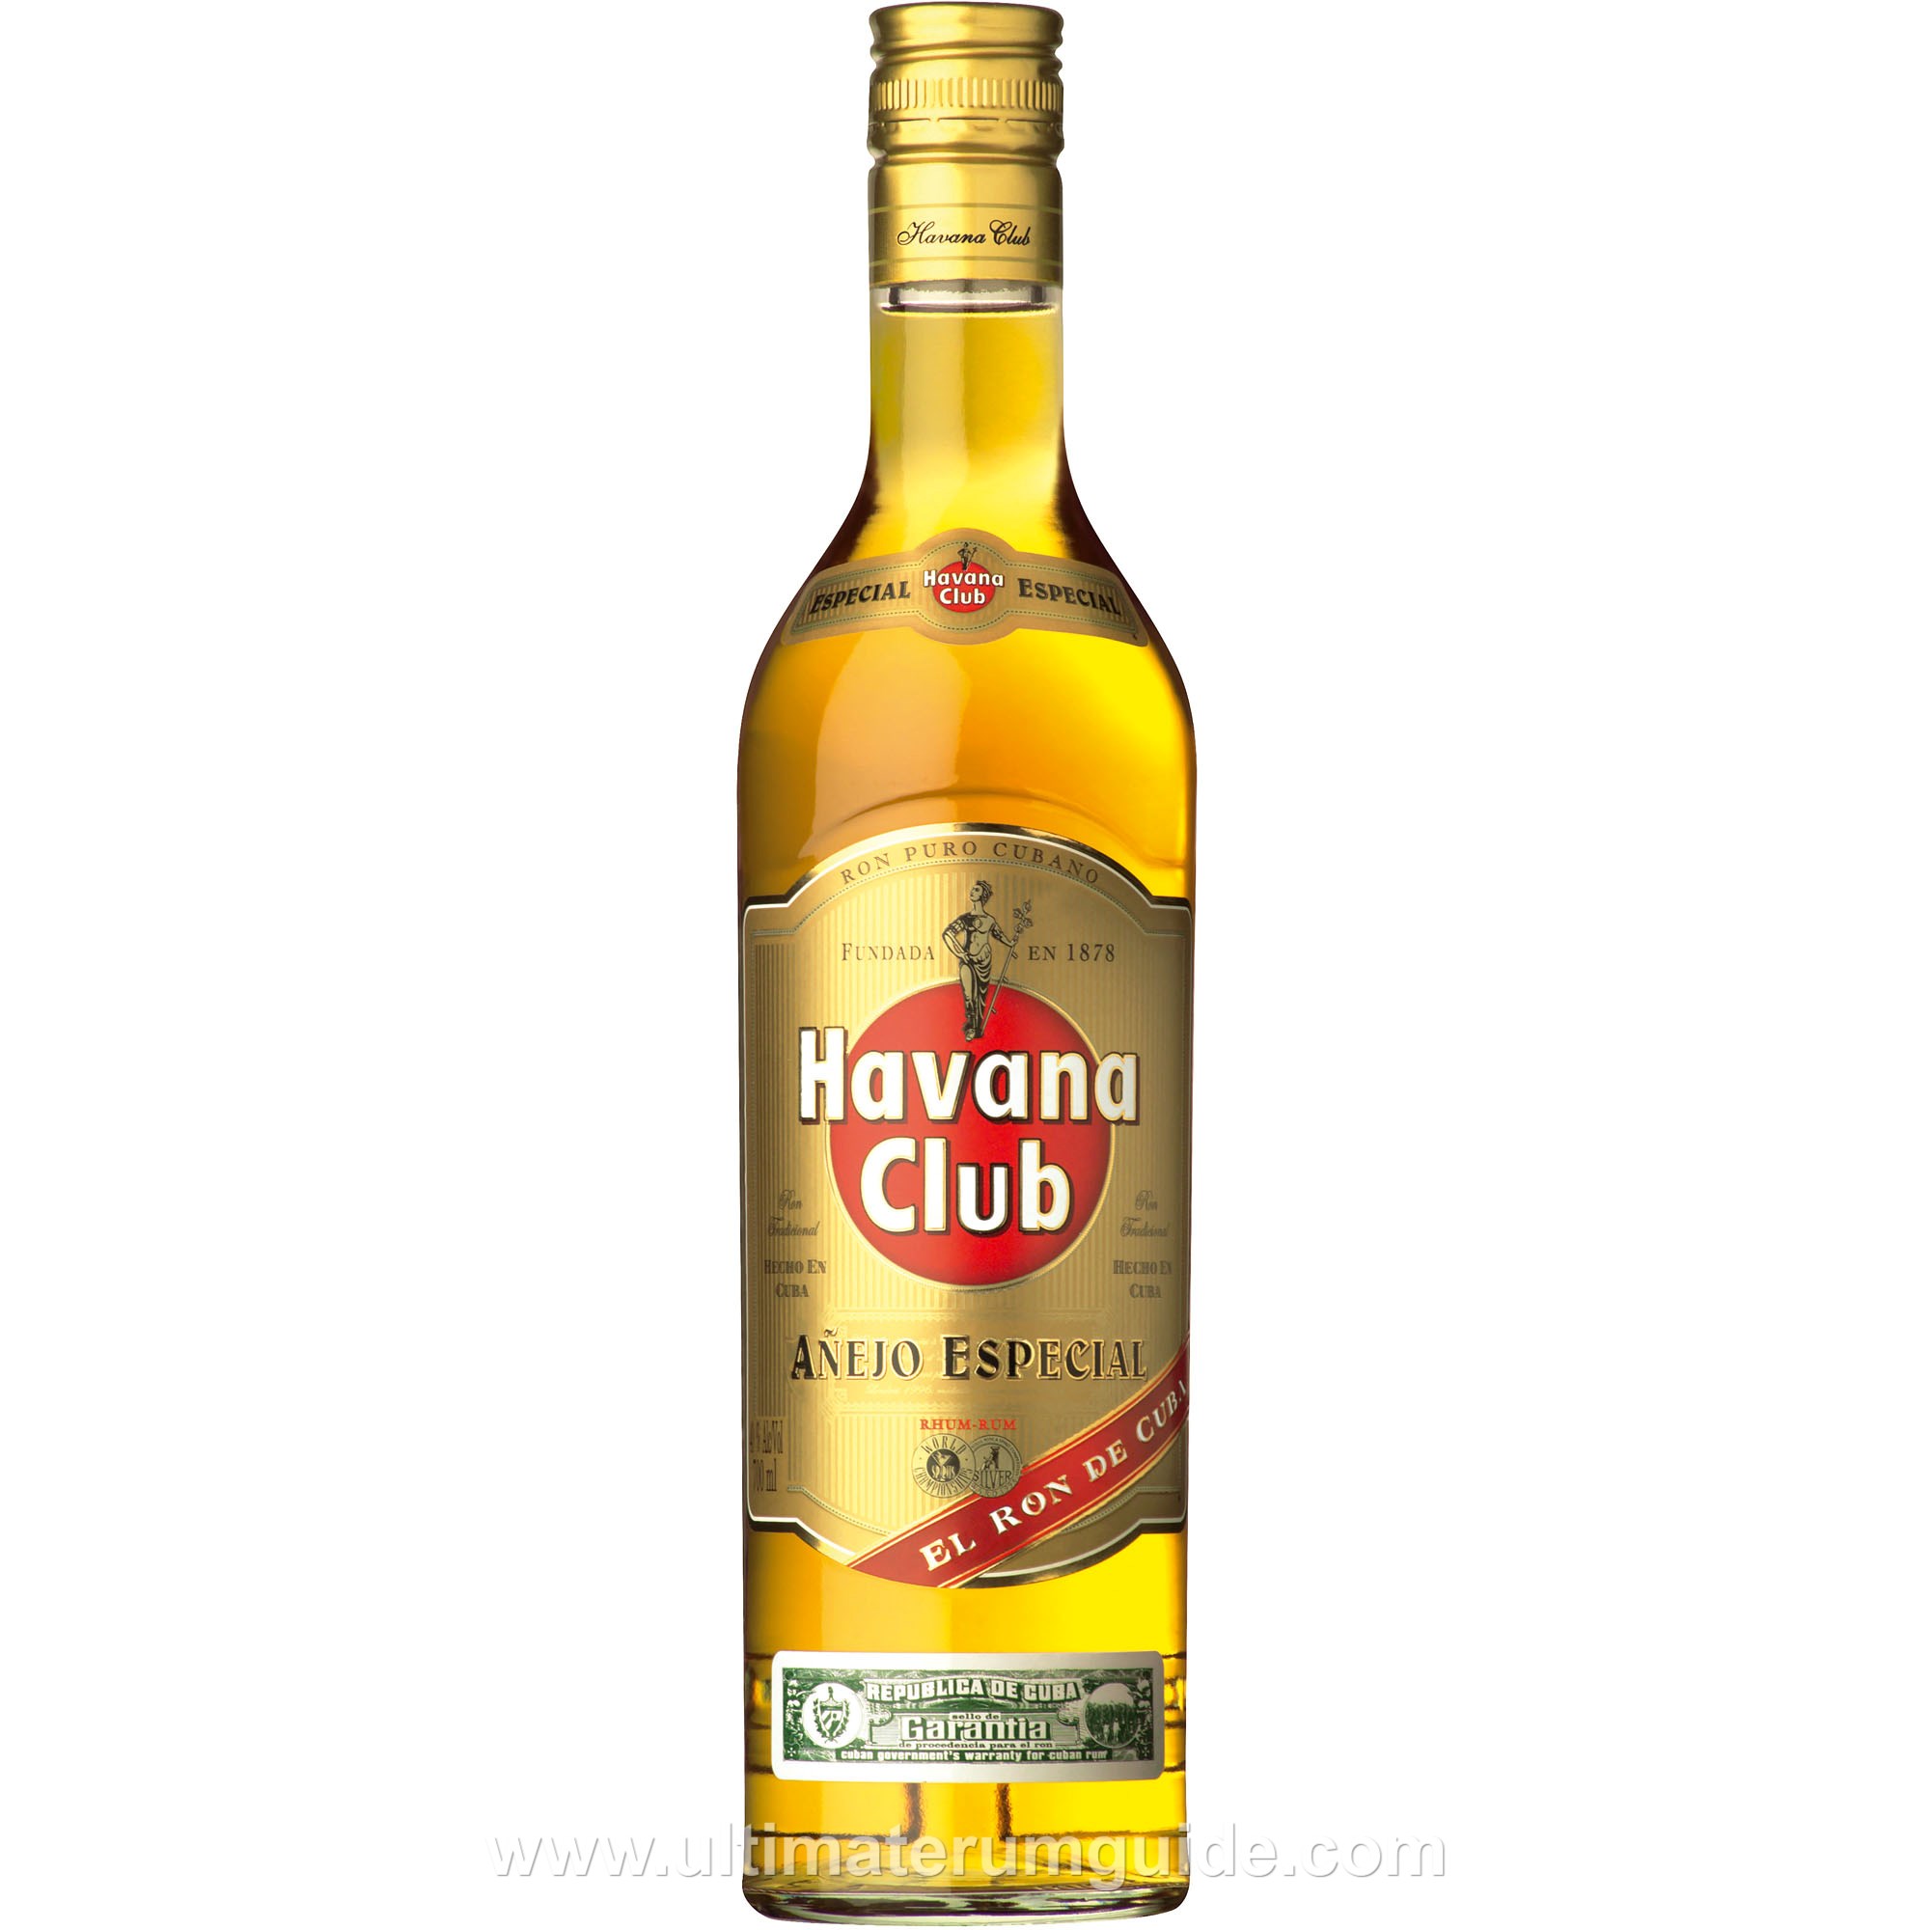 Havana Club Anejo Especial Ultimate Guide Rum –